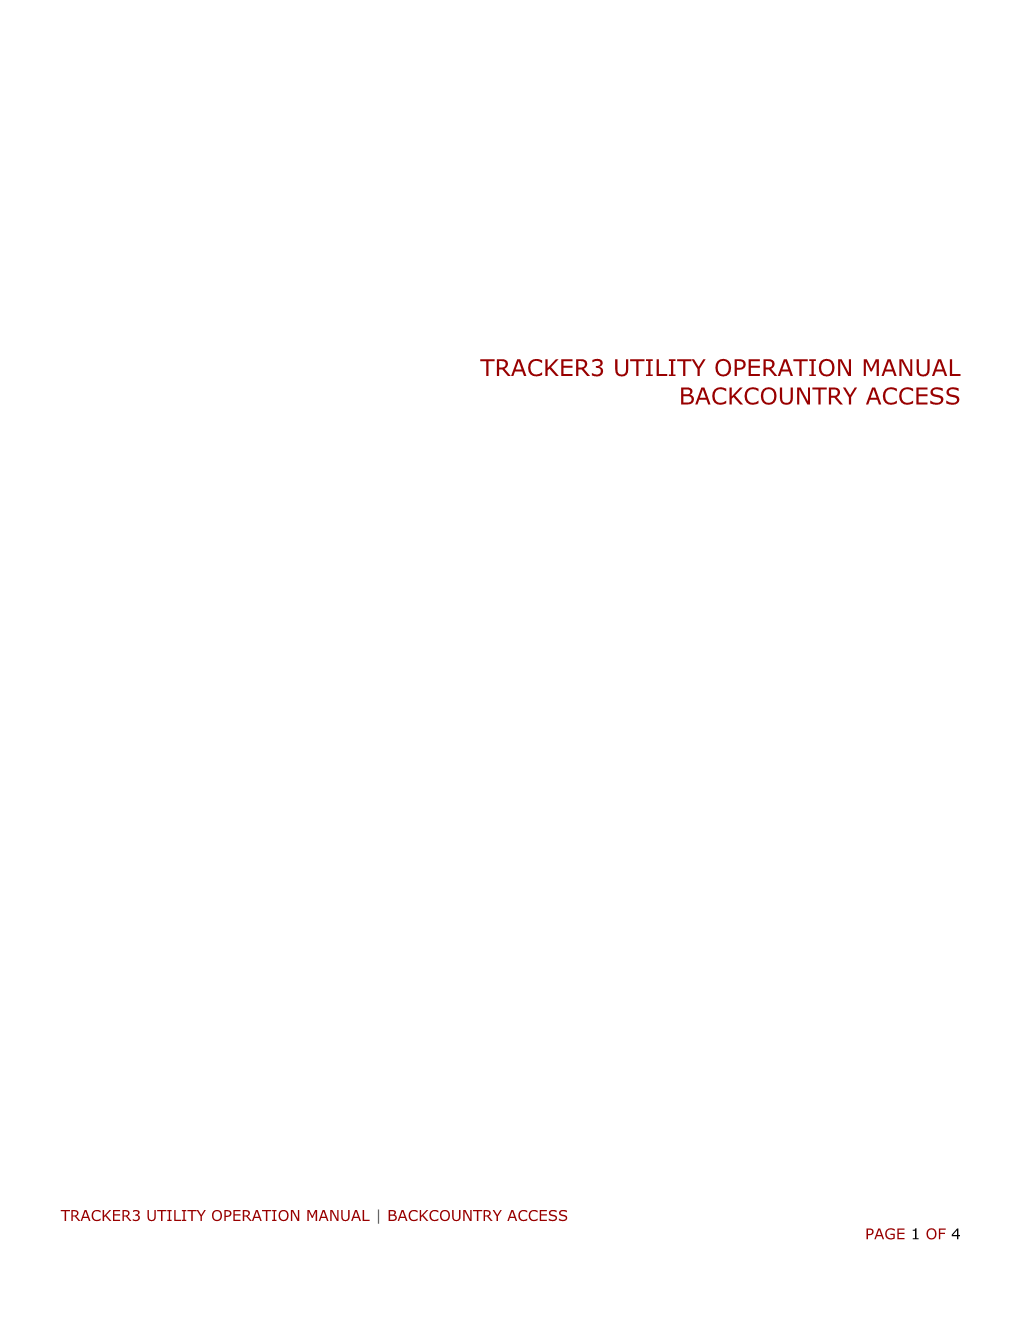 Tracker3 Utility Operation Manual